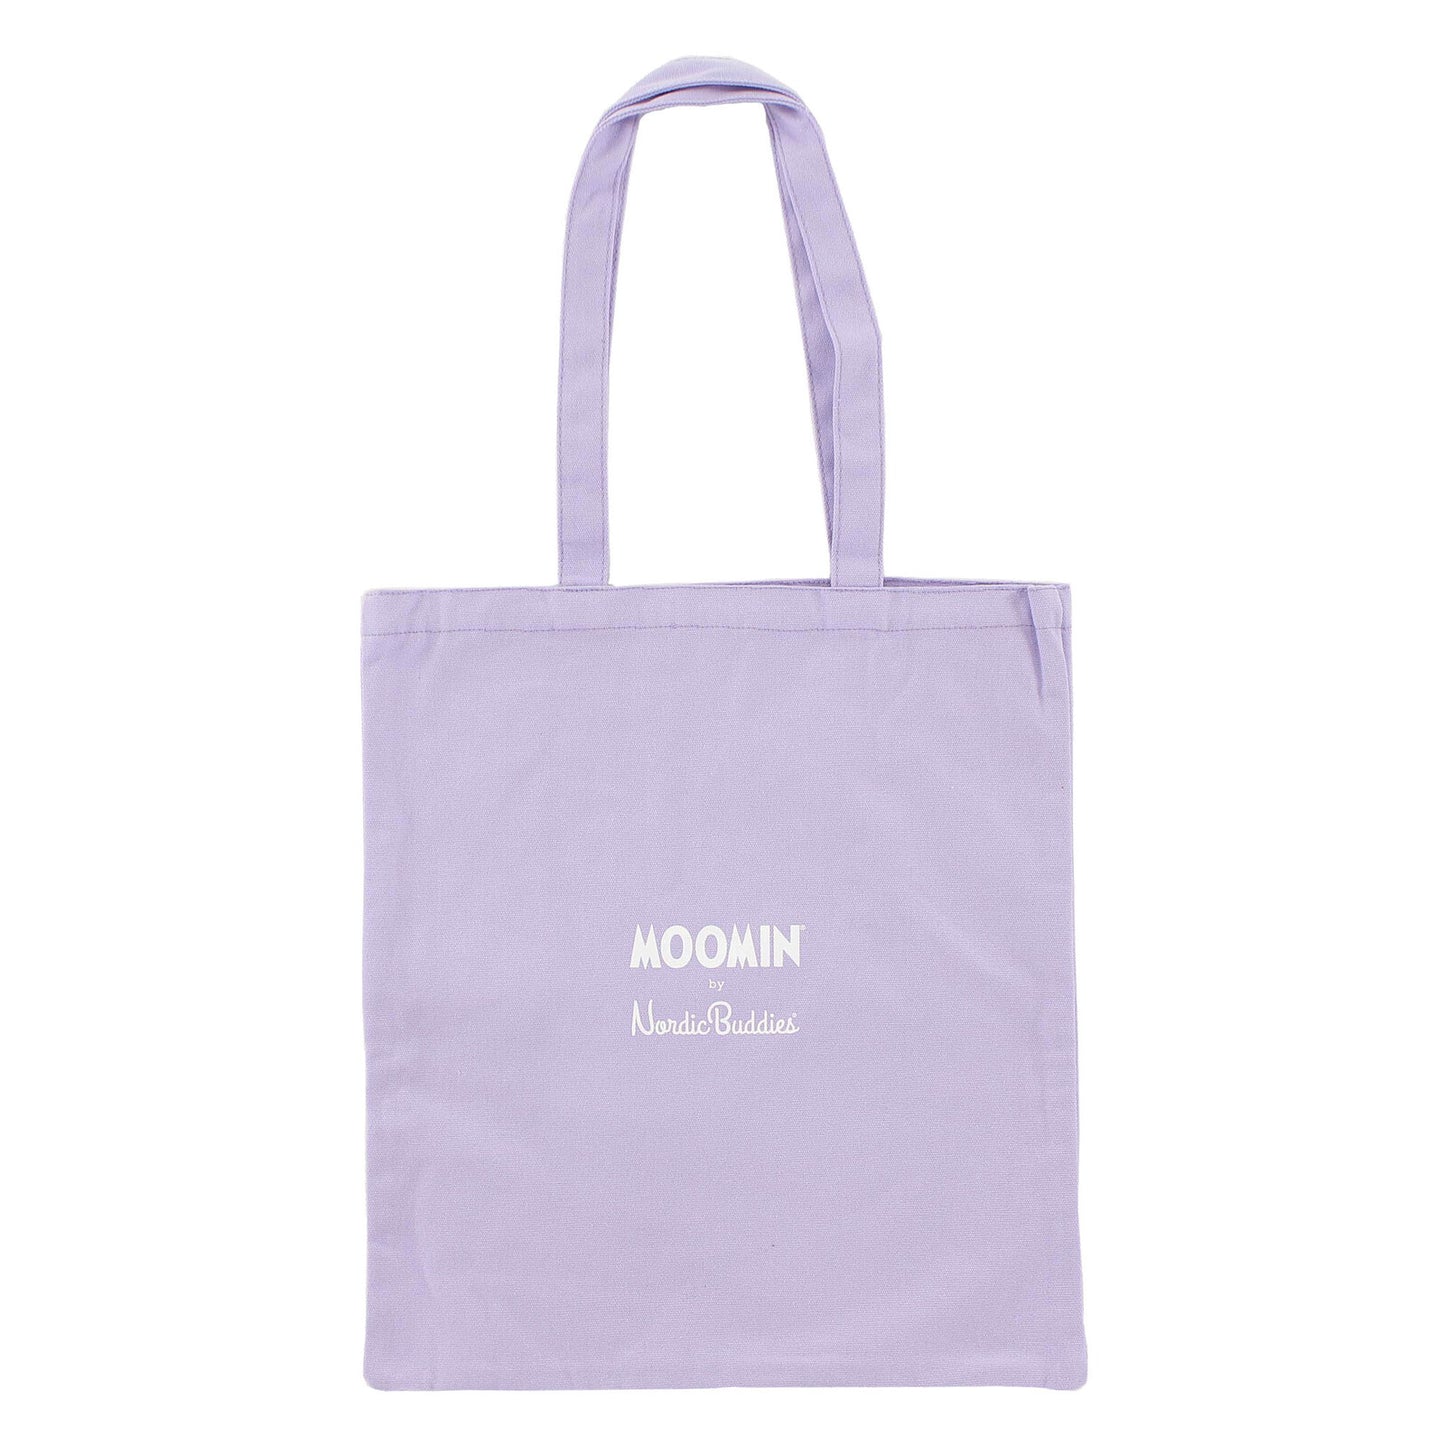  Moomin By Nordicbuddies Tote Bag 8 Colors 